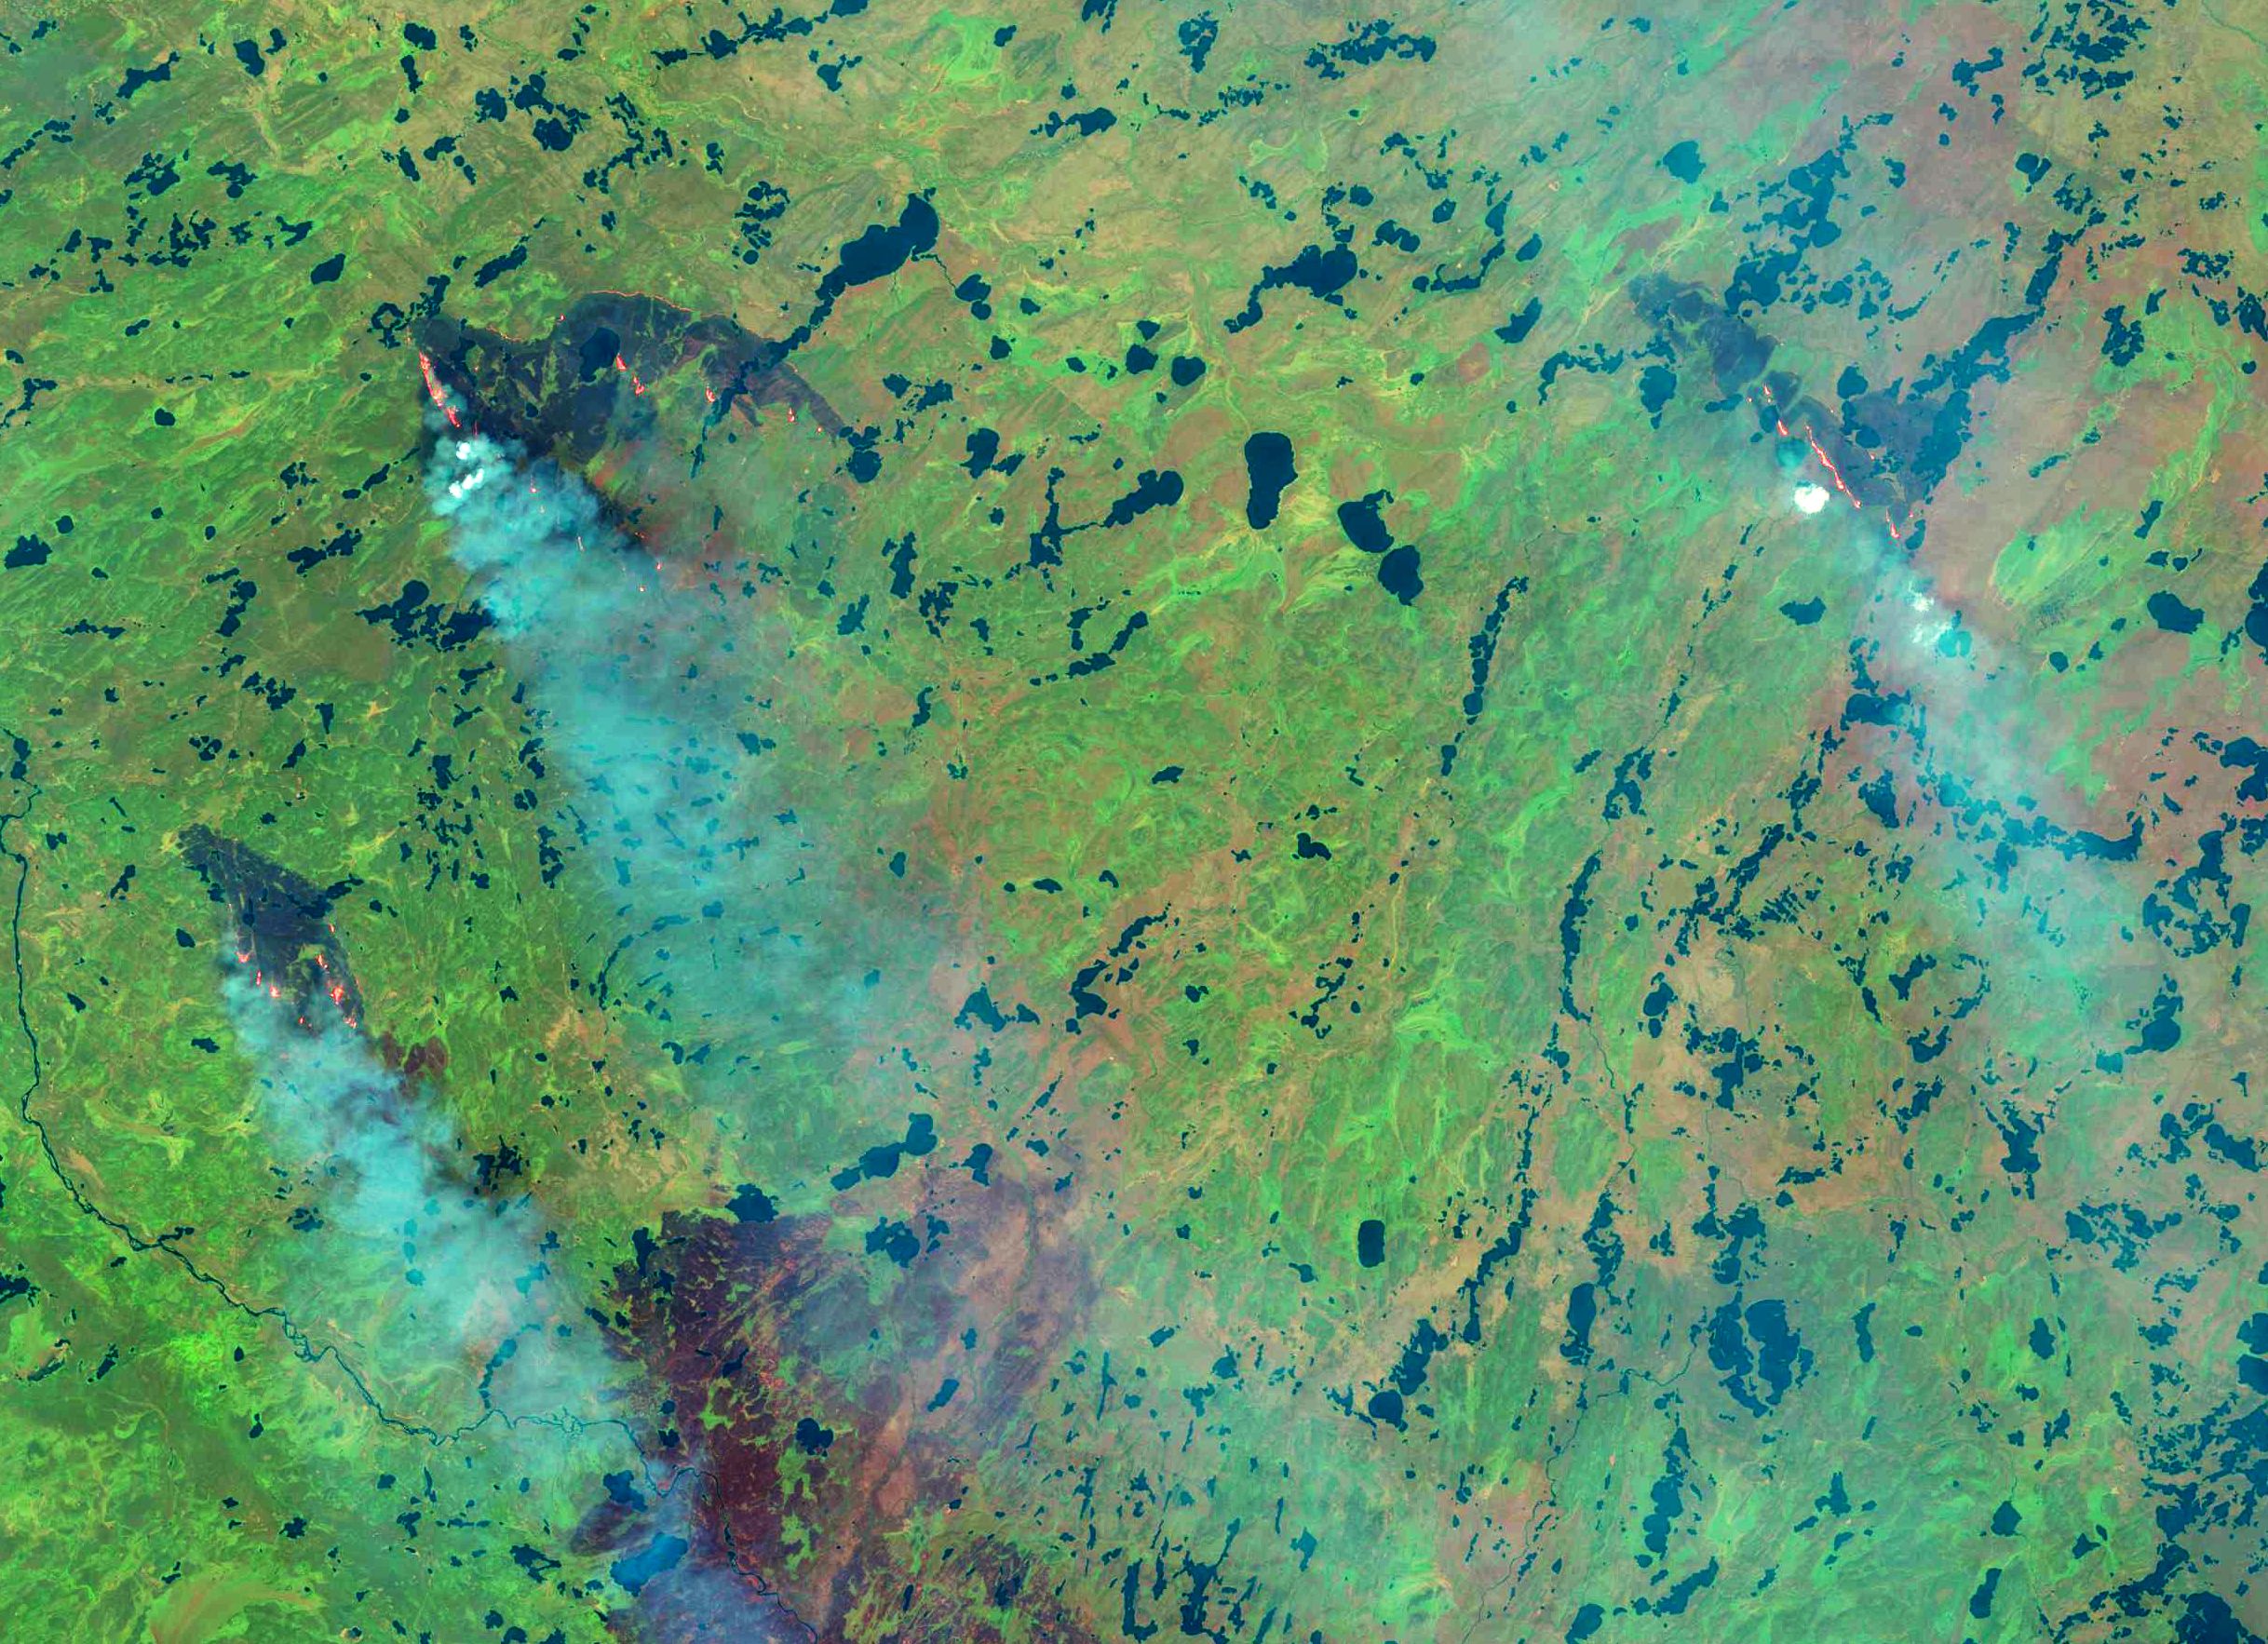 Incendies - Feux - Fire - Canada - Alberta - Saskatchewan- Landsat 8 - OLI - satellites - 29 Juin 2015 - USGS